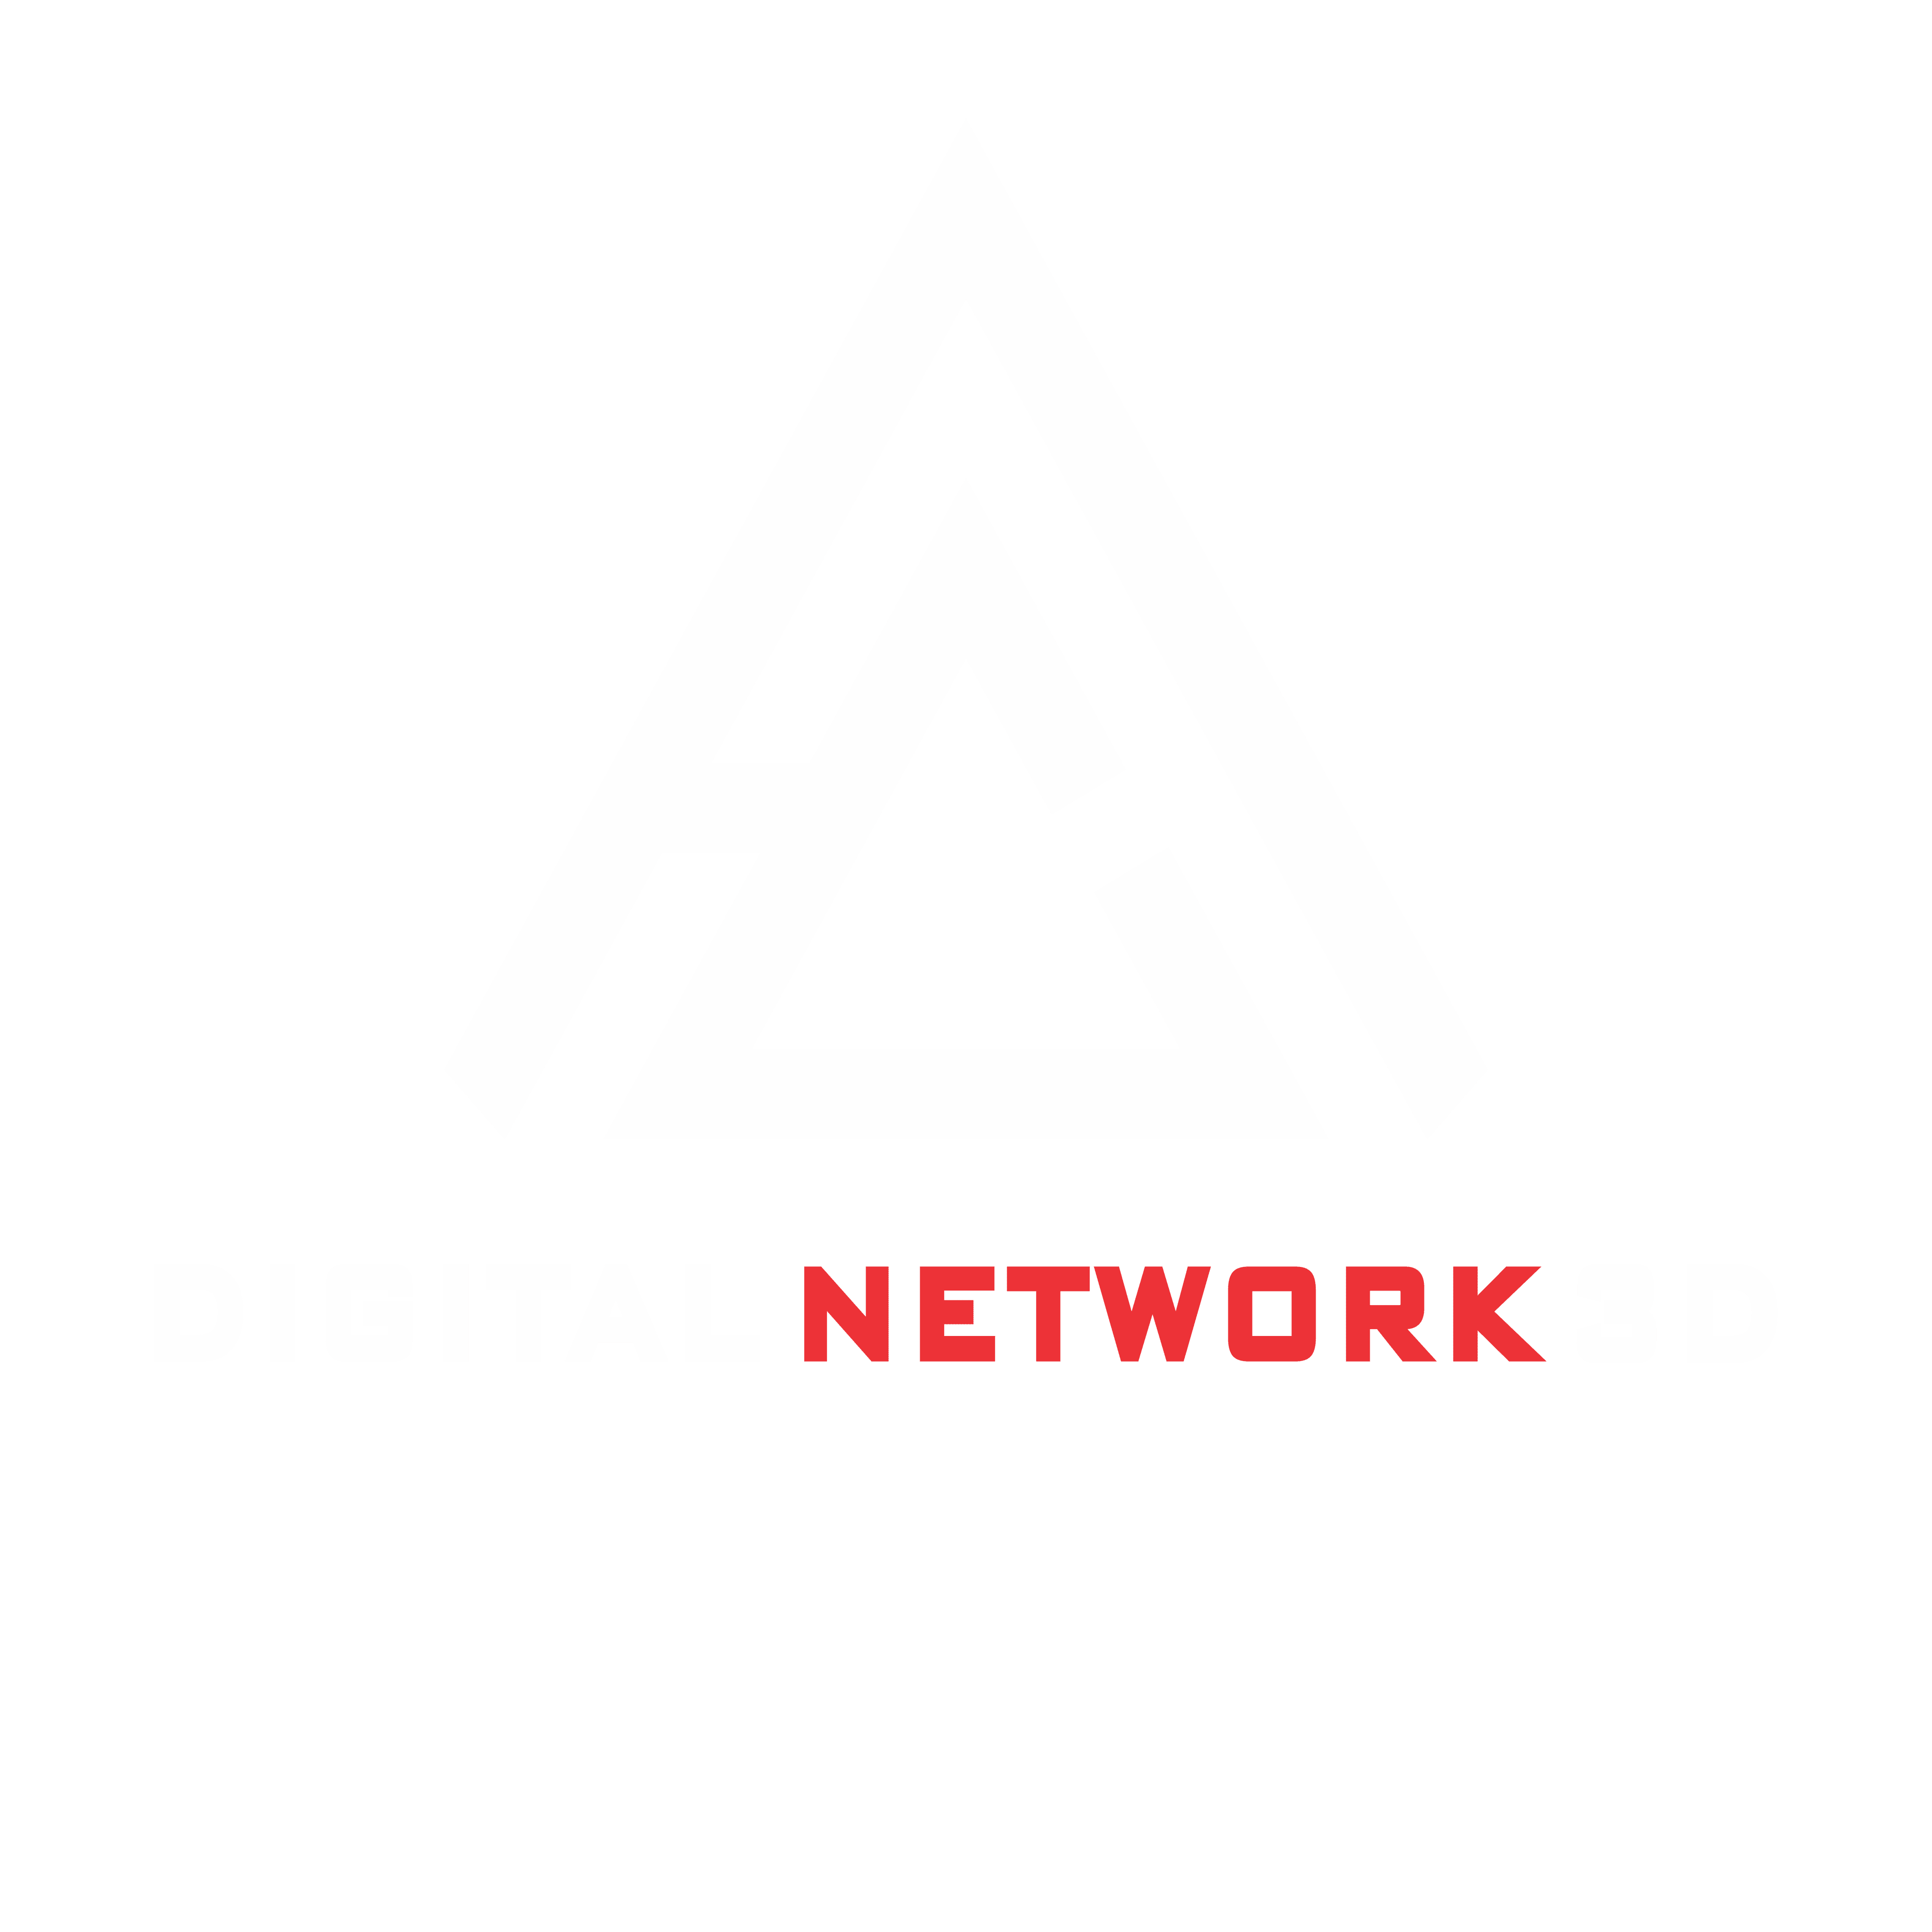 Digital Network 3D